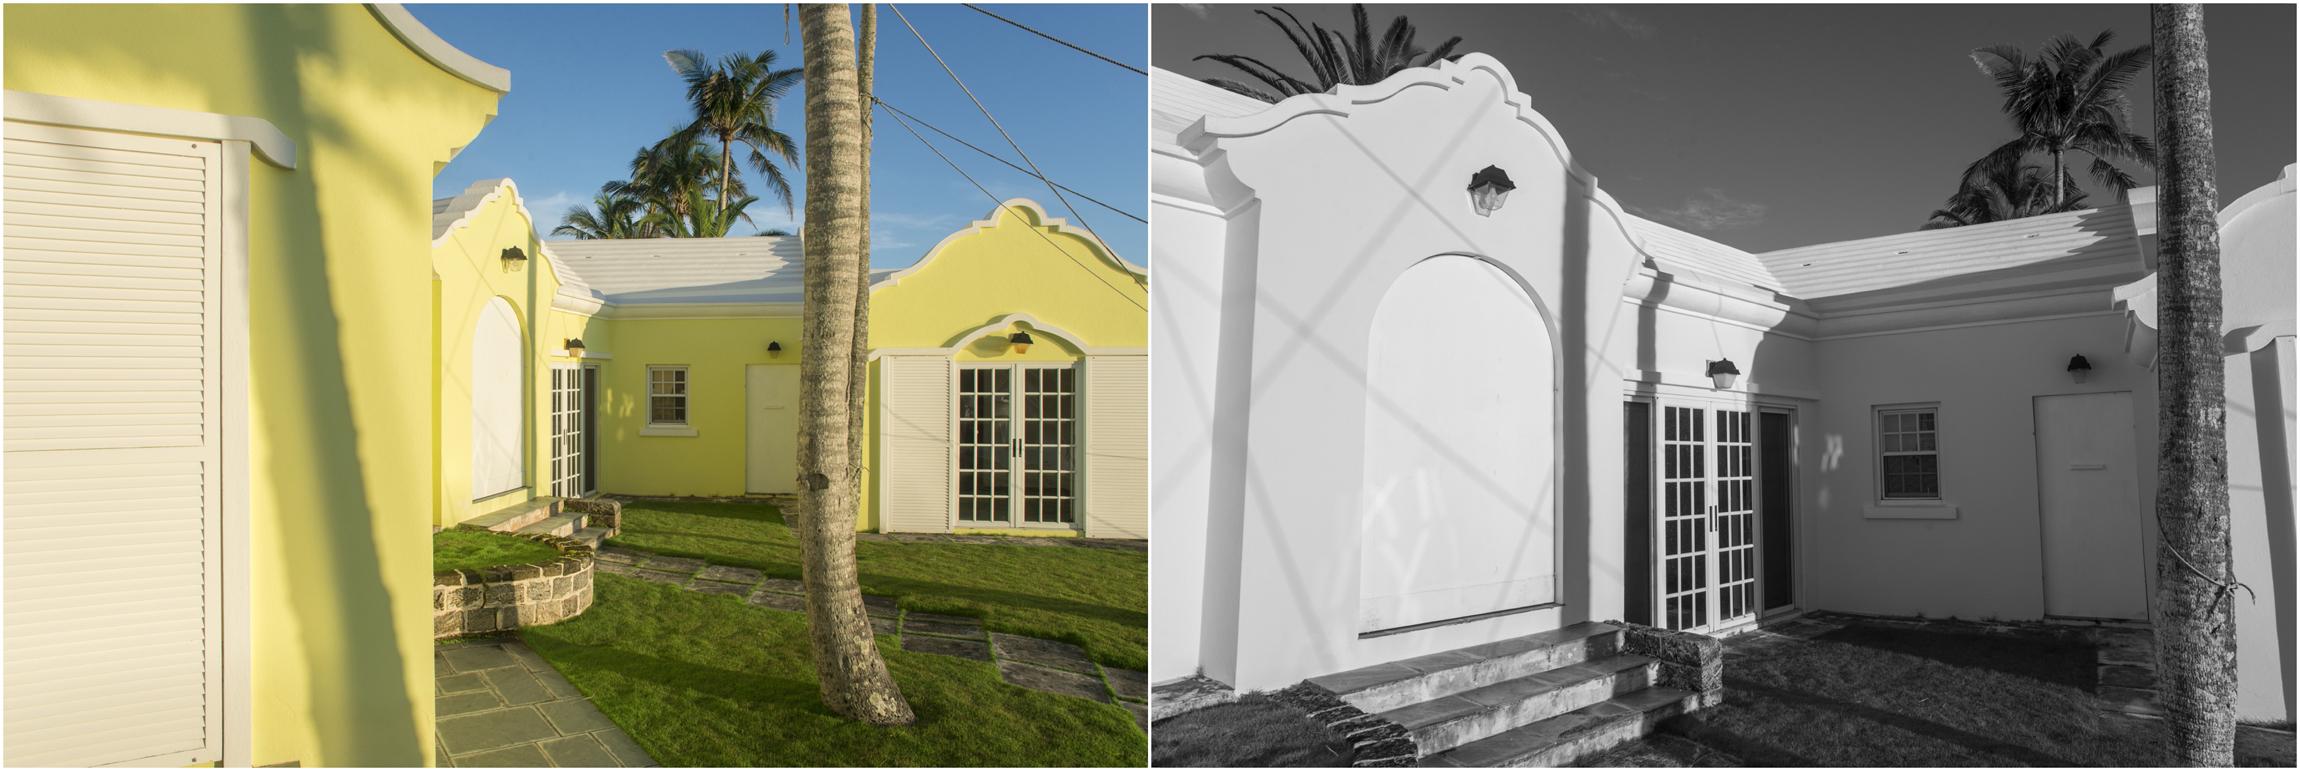 ©FianderFoto_Architecture_Bermuda_Palomera_022.jpg